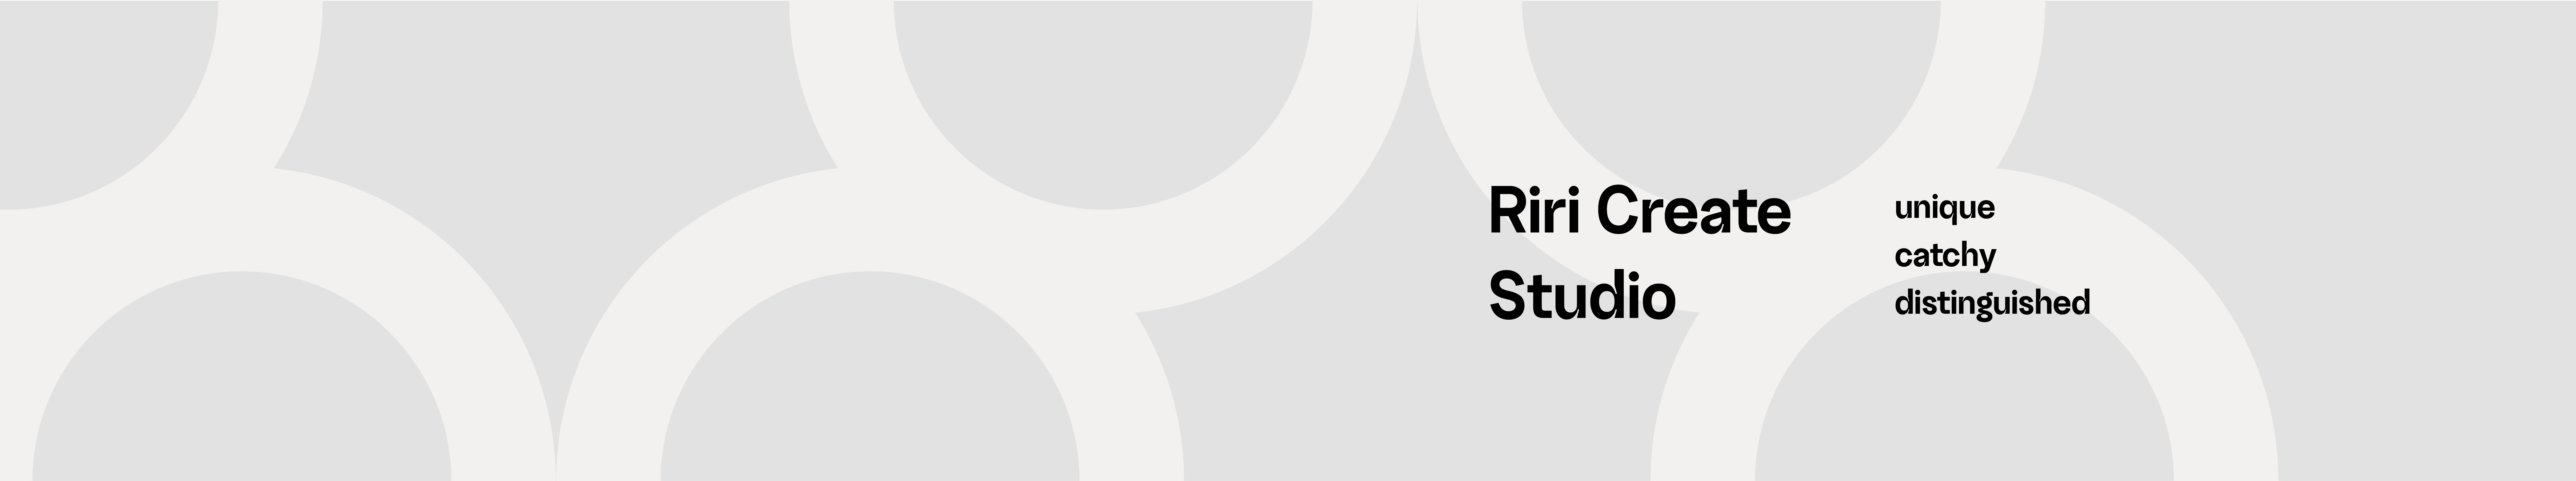 Banner de perfil de Riri Create Studio